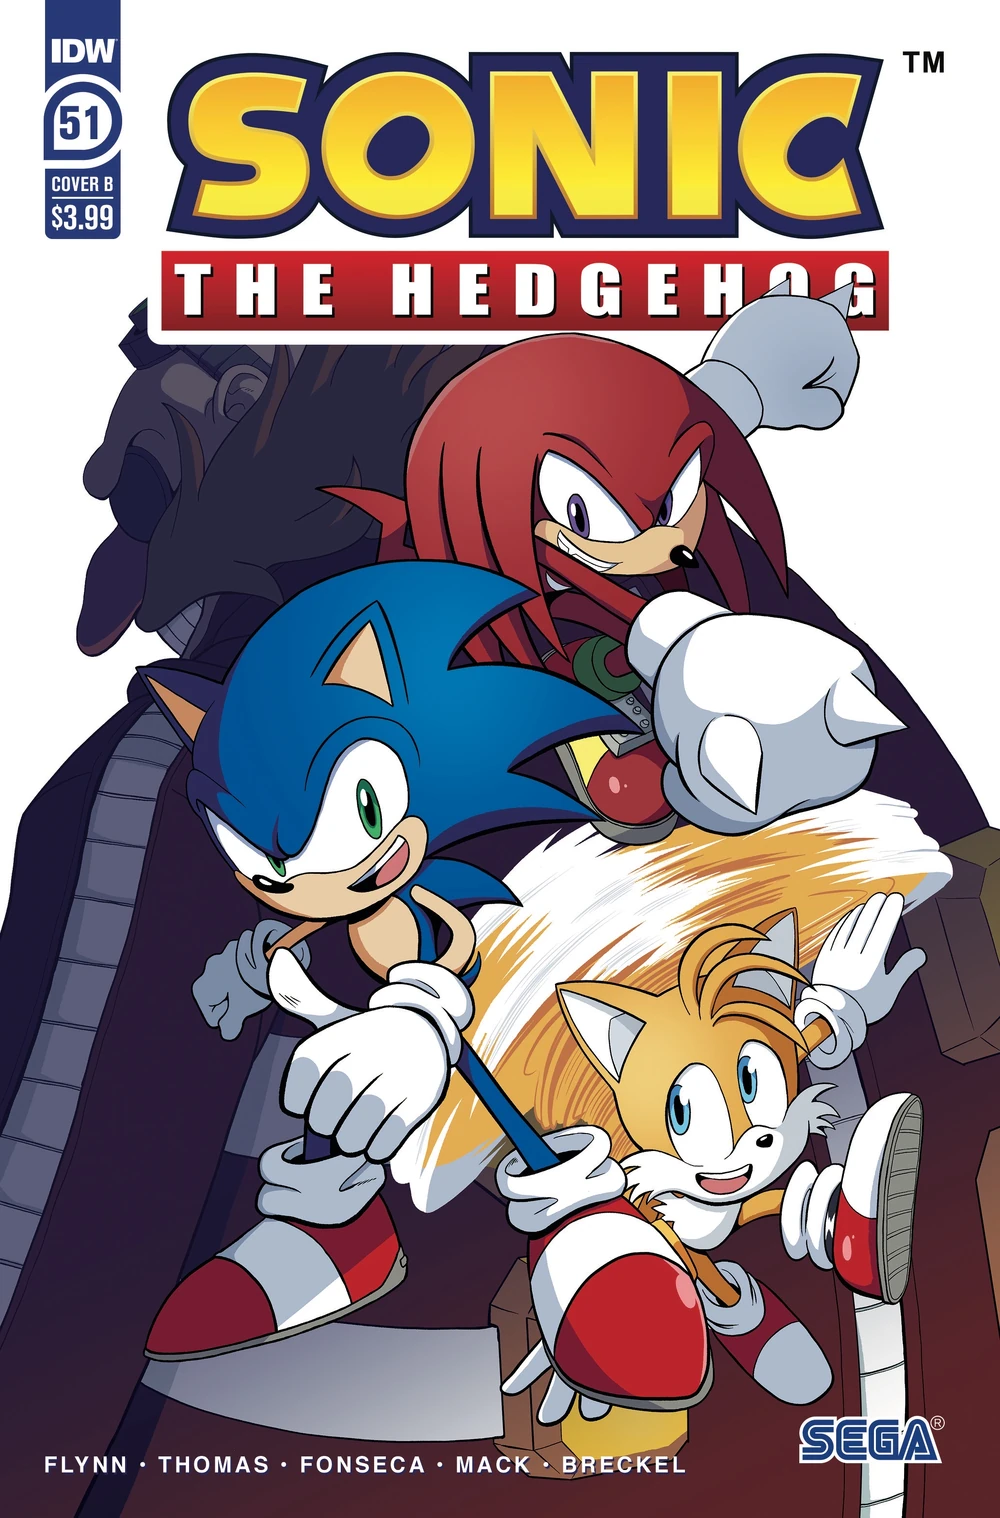 Sonic The Hedgehog #51 Cover B